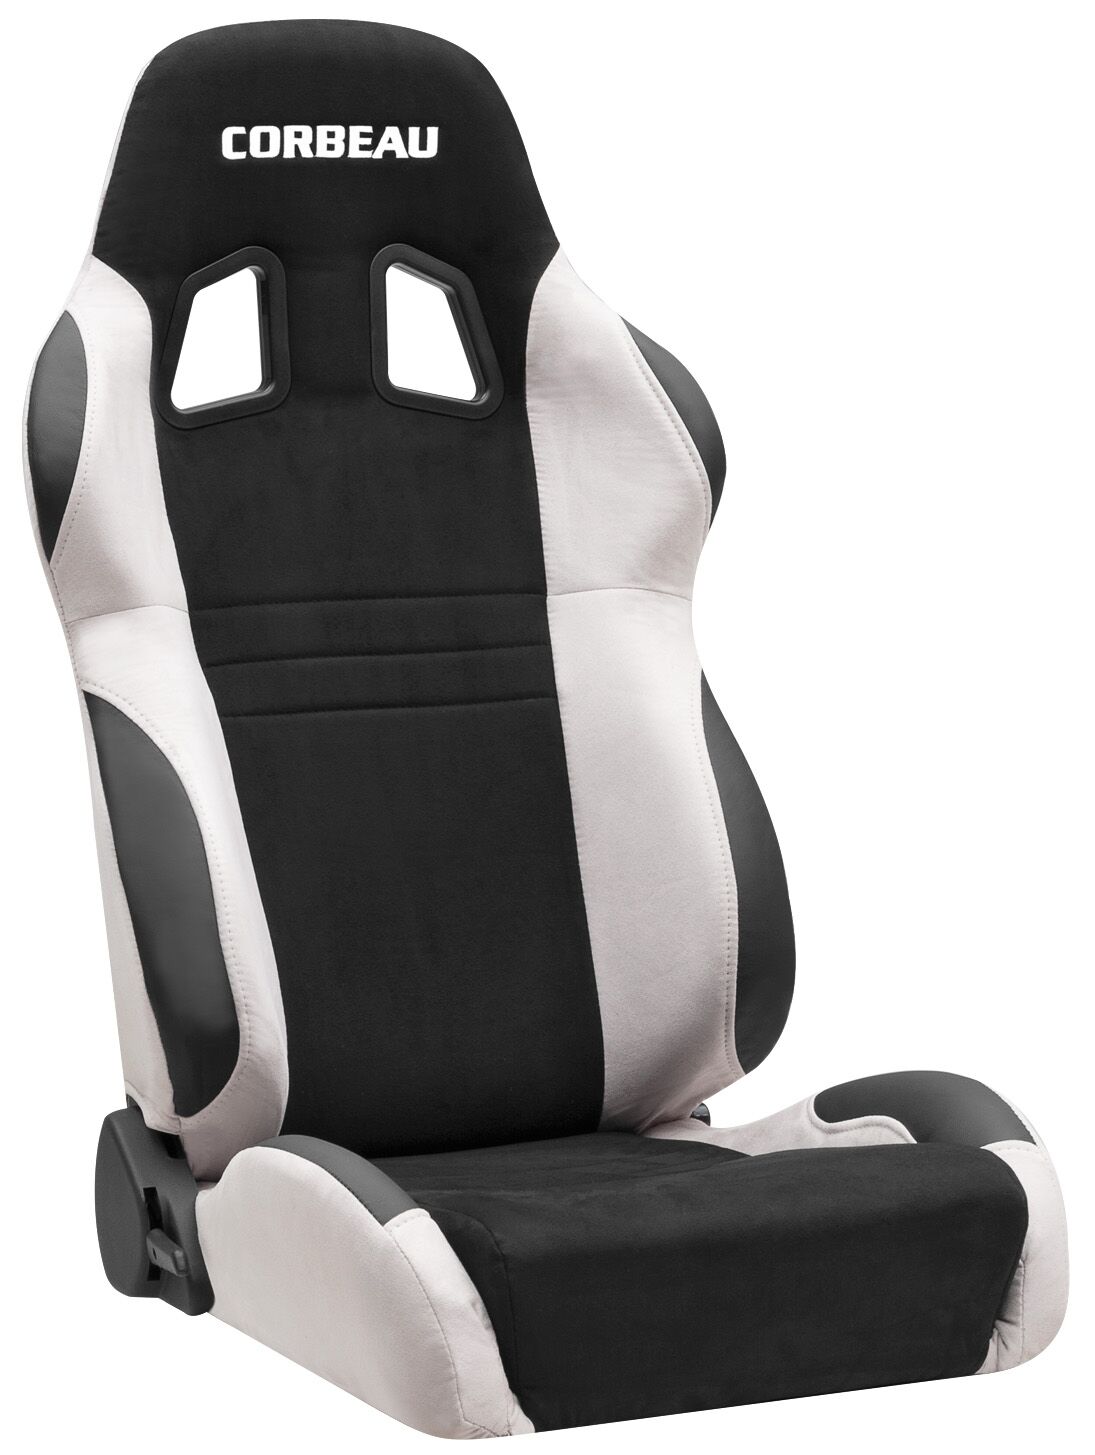 Corbeau A4 Seats - Gray/Black Microsuede